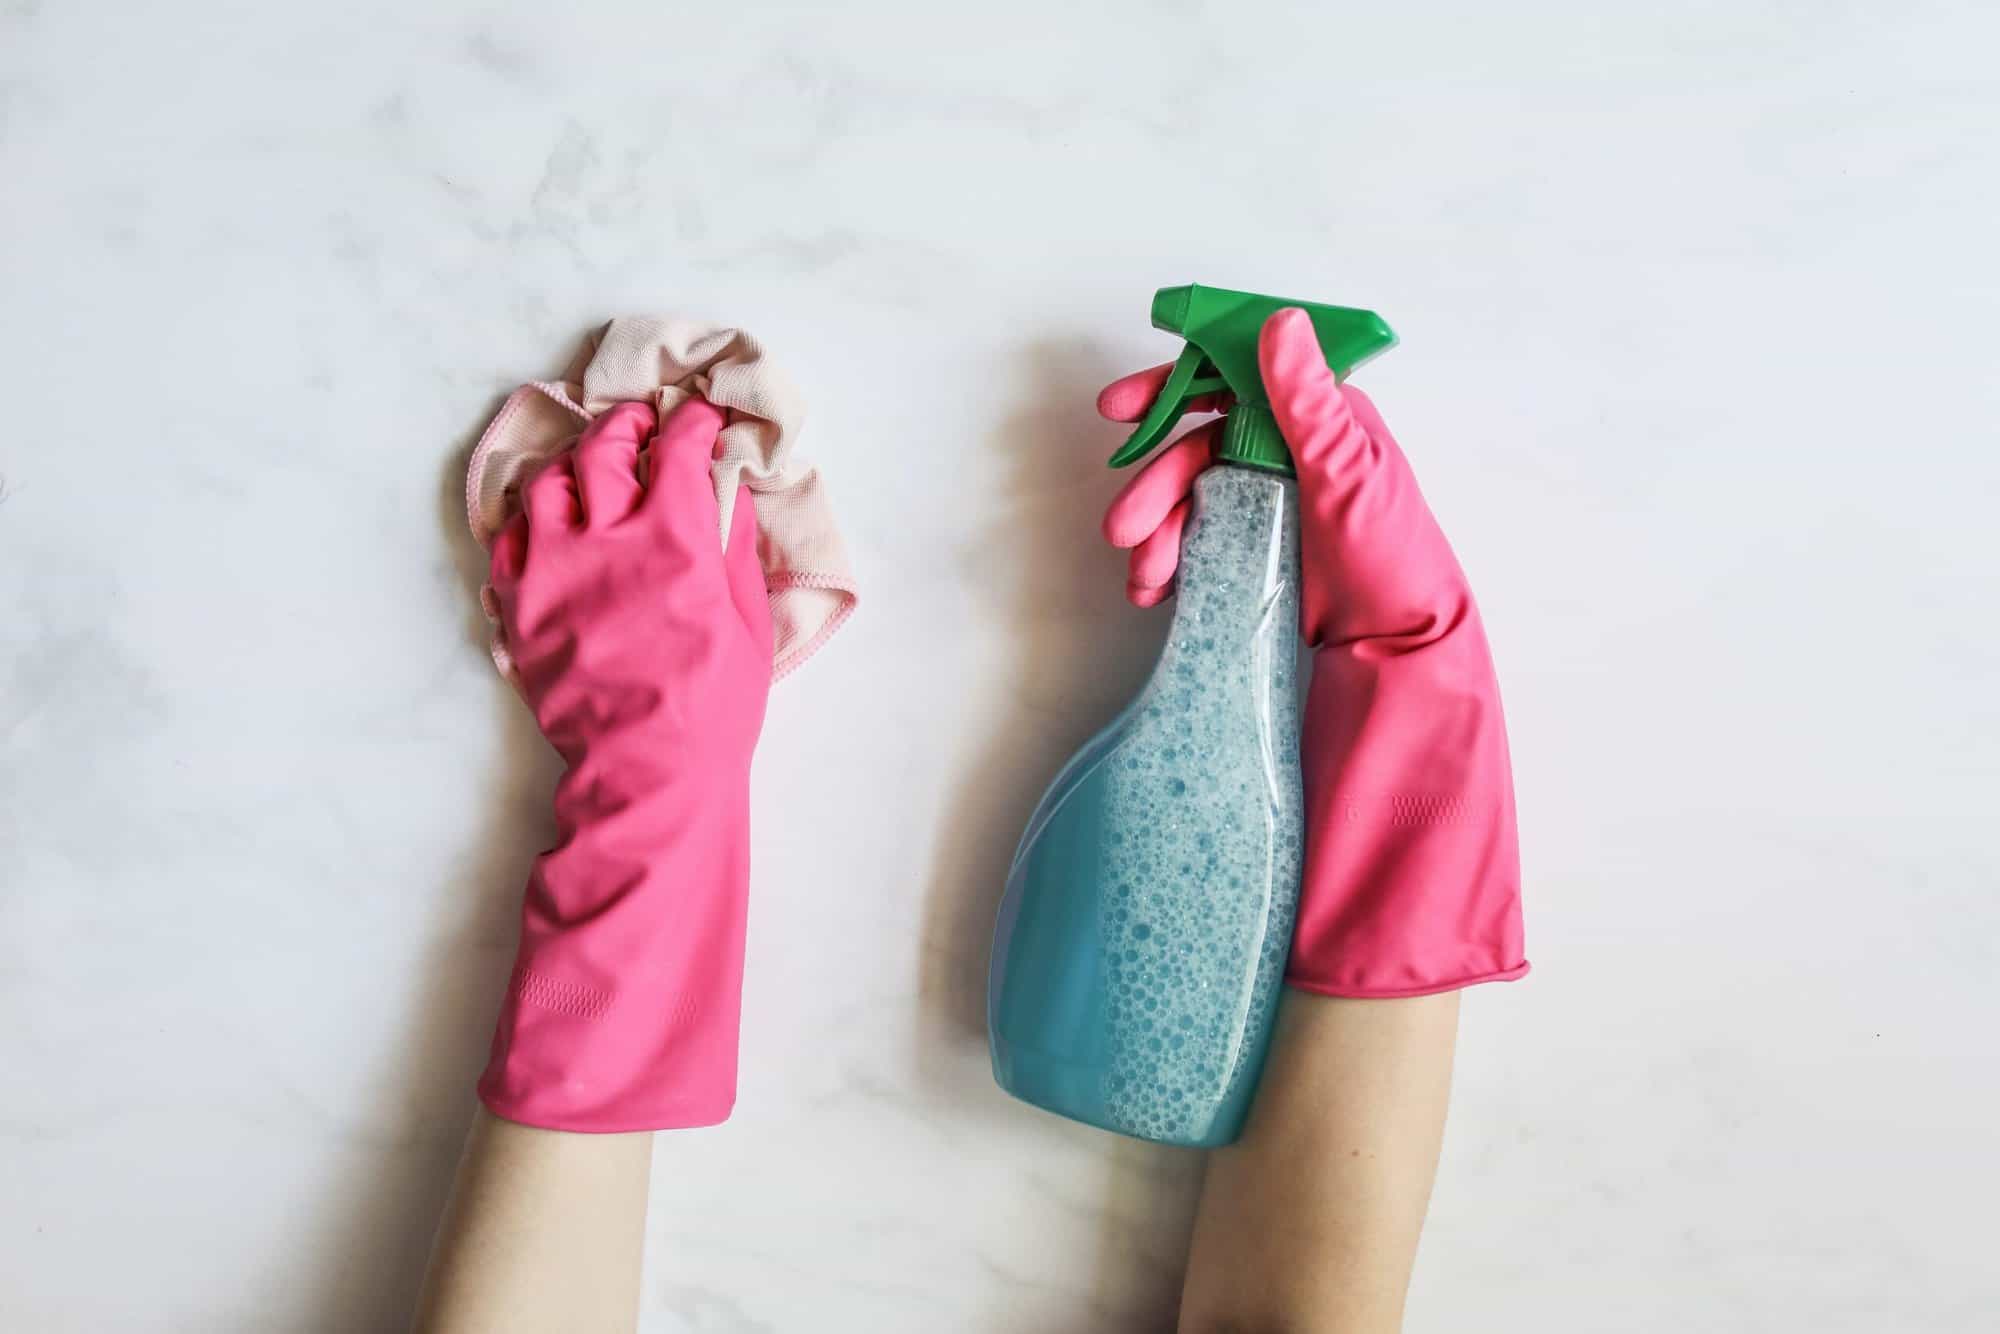 Cleaning Bottle & Gloves